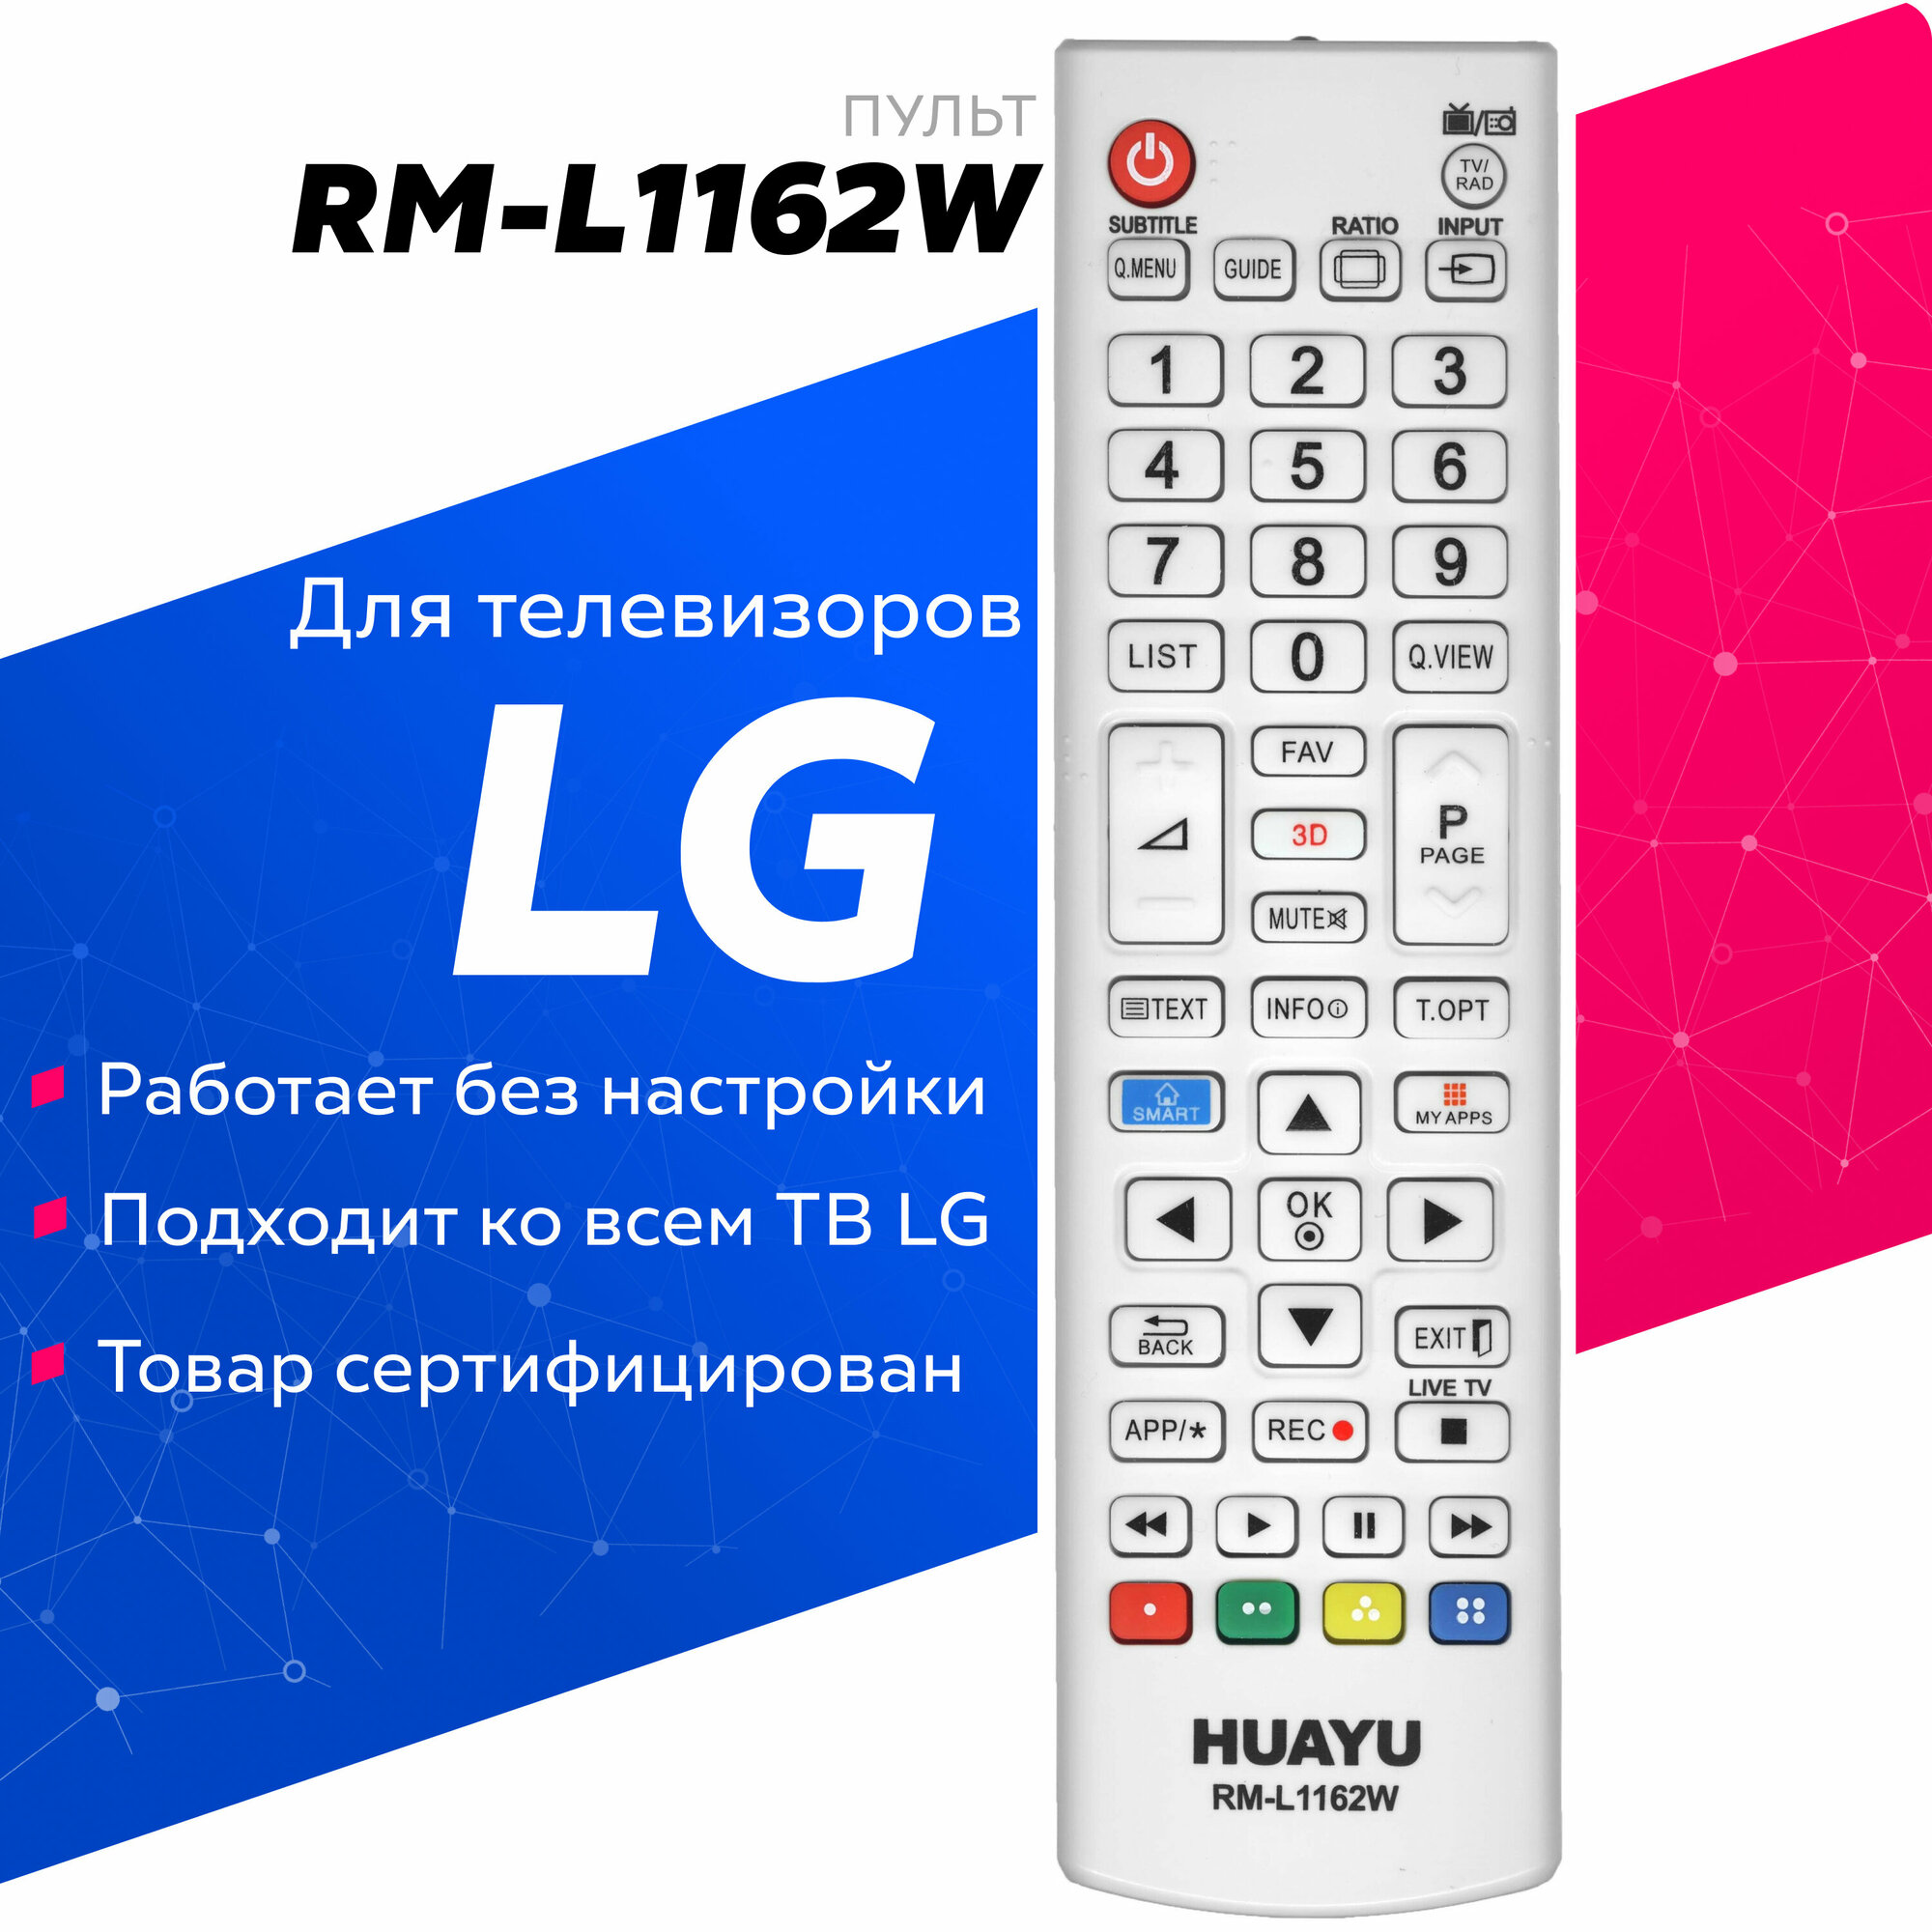 Пульт ДУ Huayu RM-L1162 для телевизоров LG